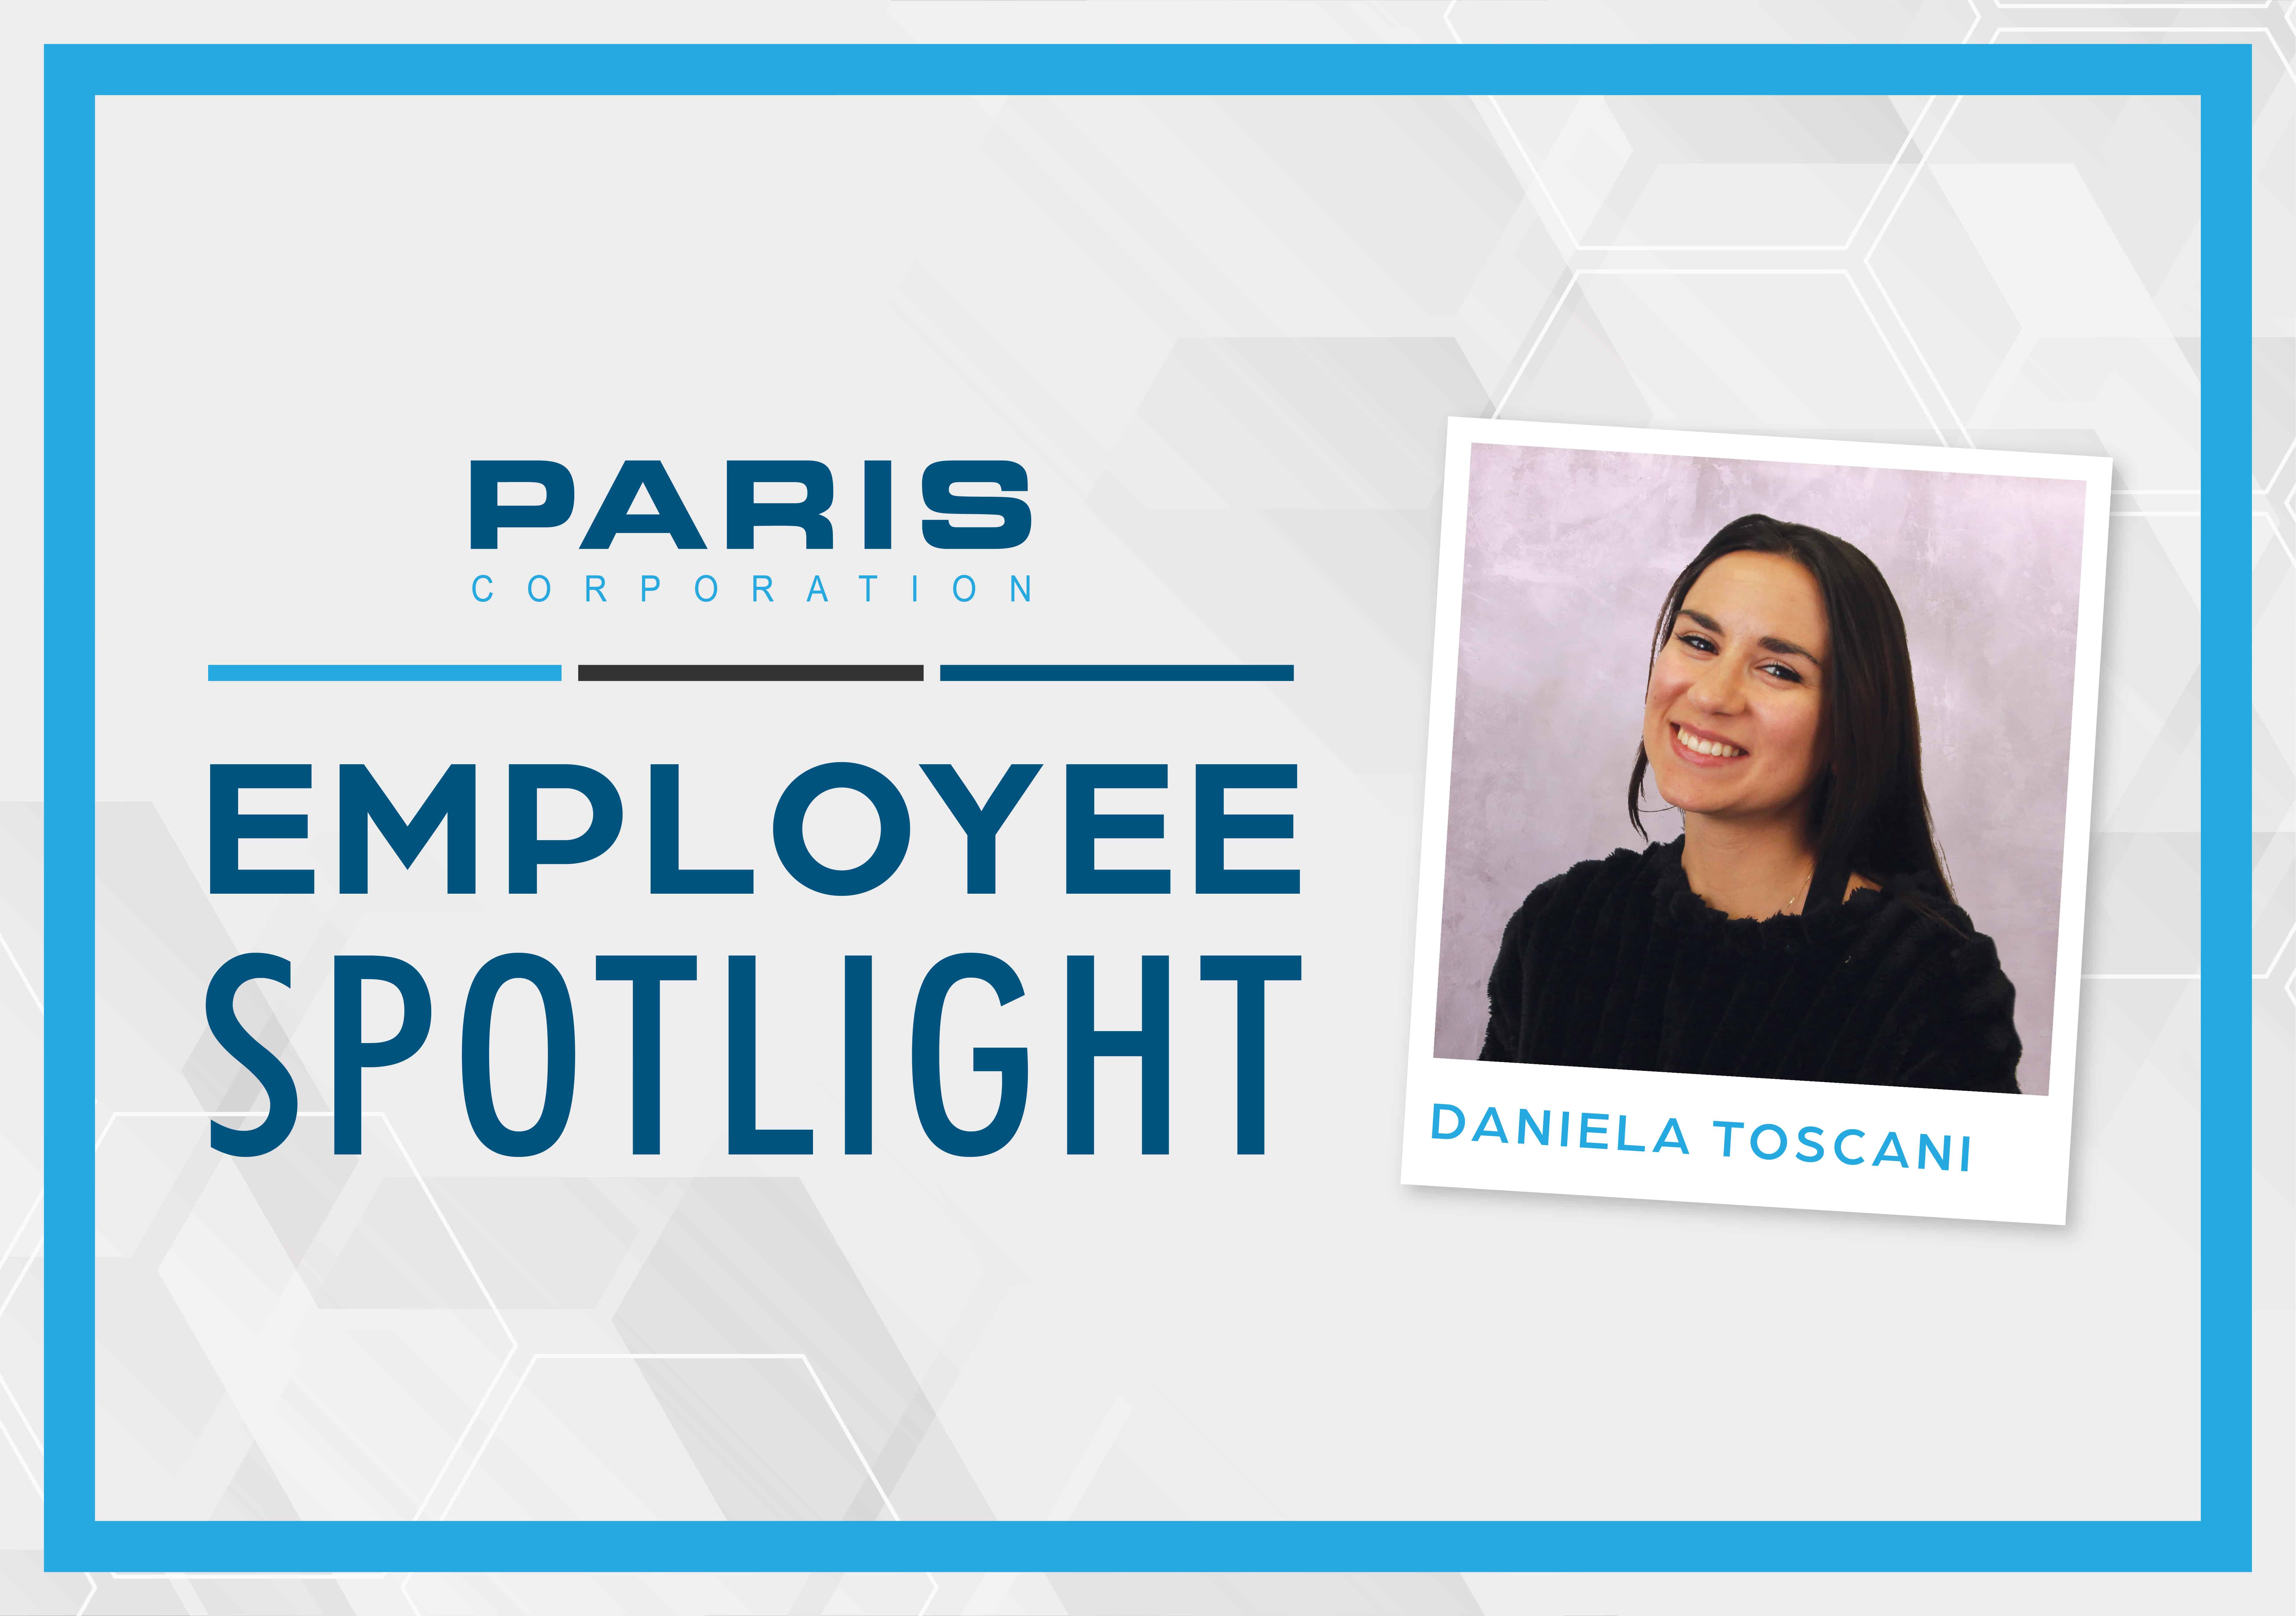 Daniela Toscani, corporation, employee, spotlight, coworkers, friends, 20 questions, interview, employee spotlight, employee engagement